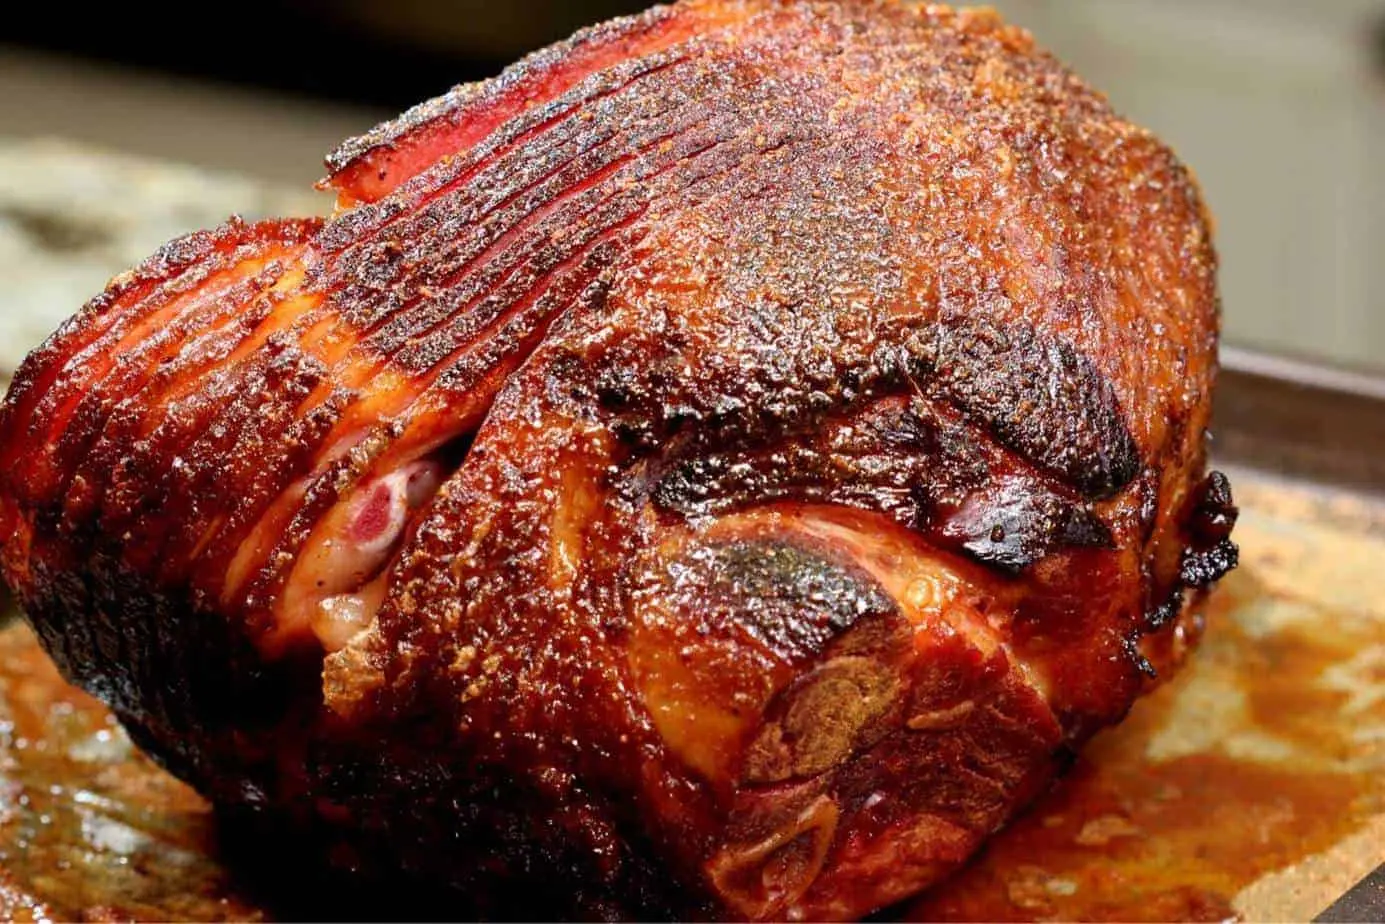 smoked ham recipe - Can I glaze smoked ham